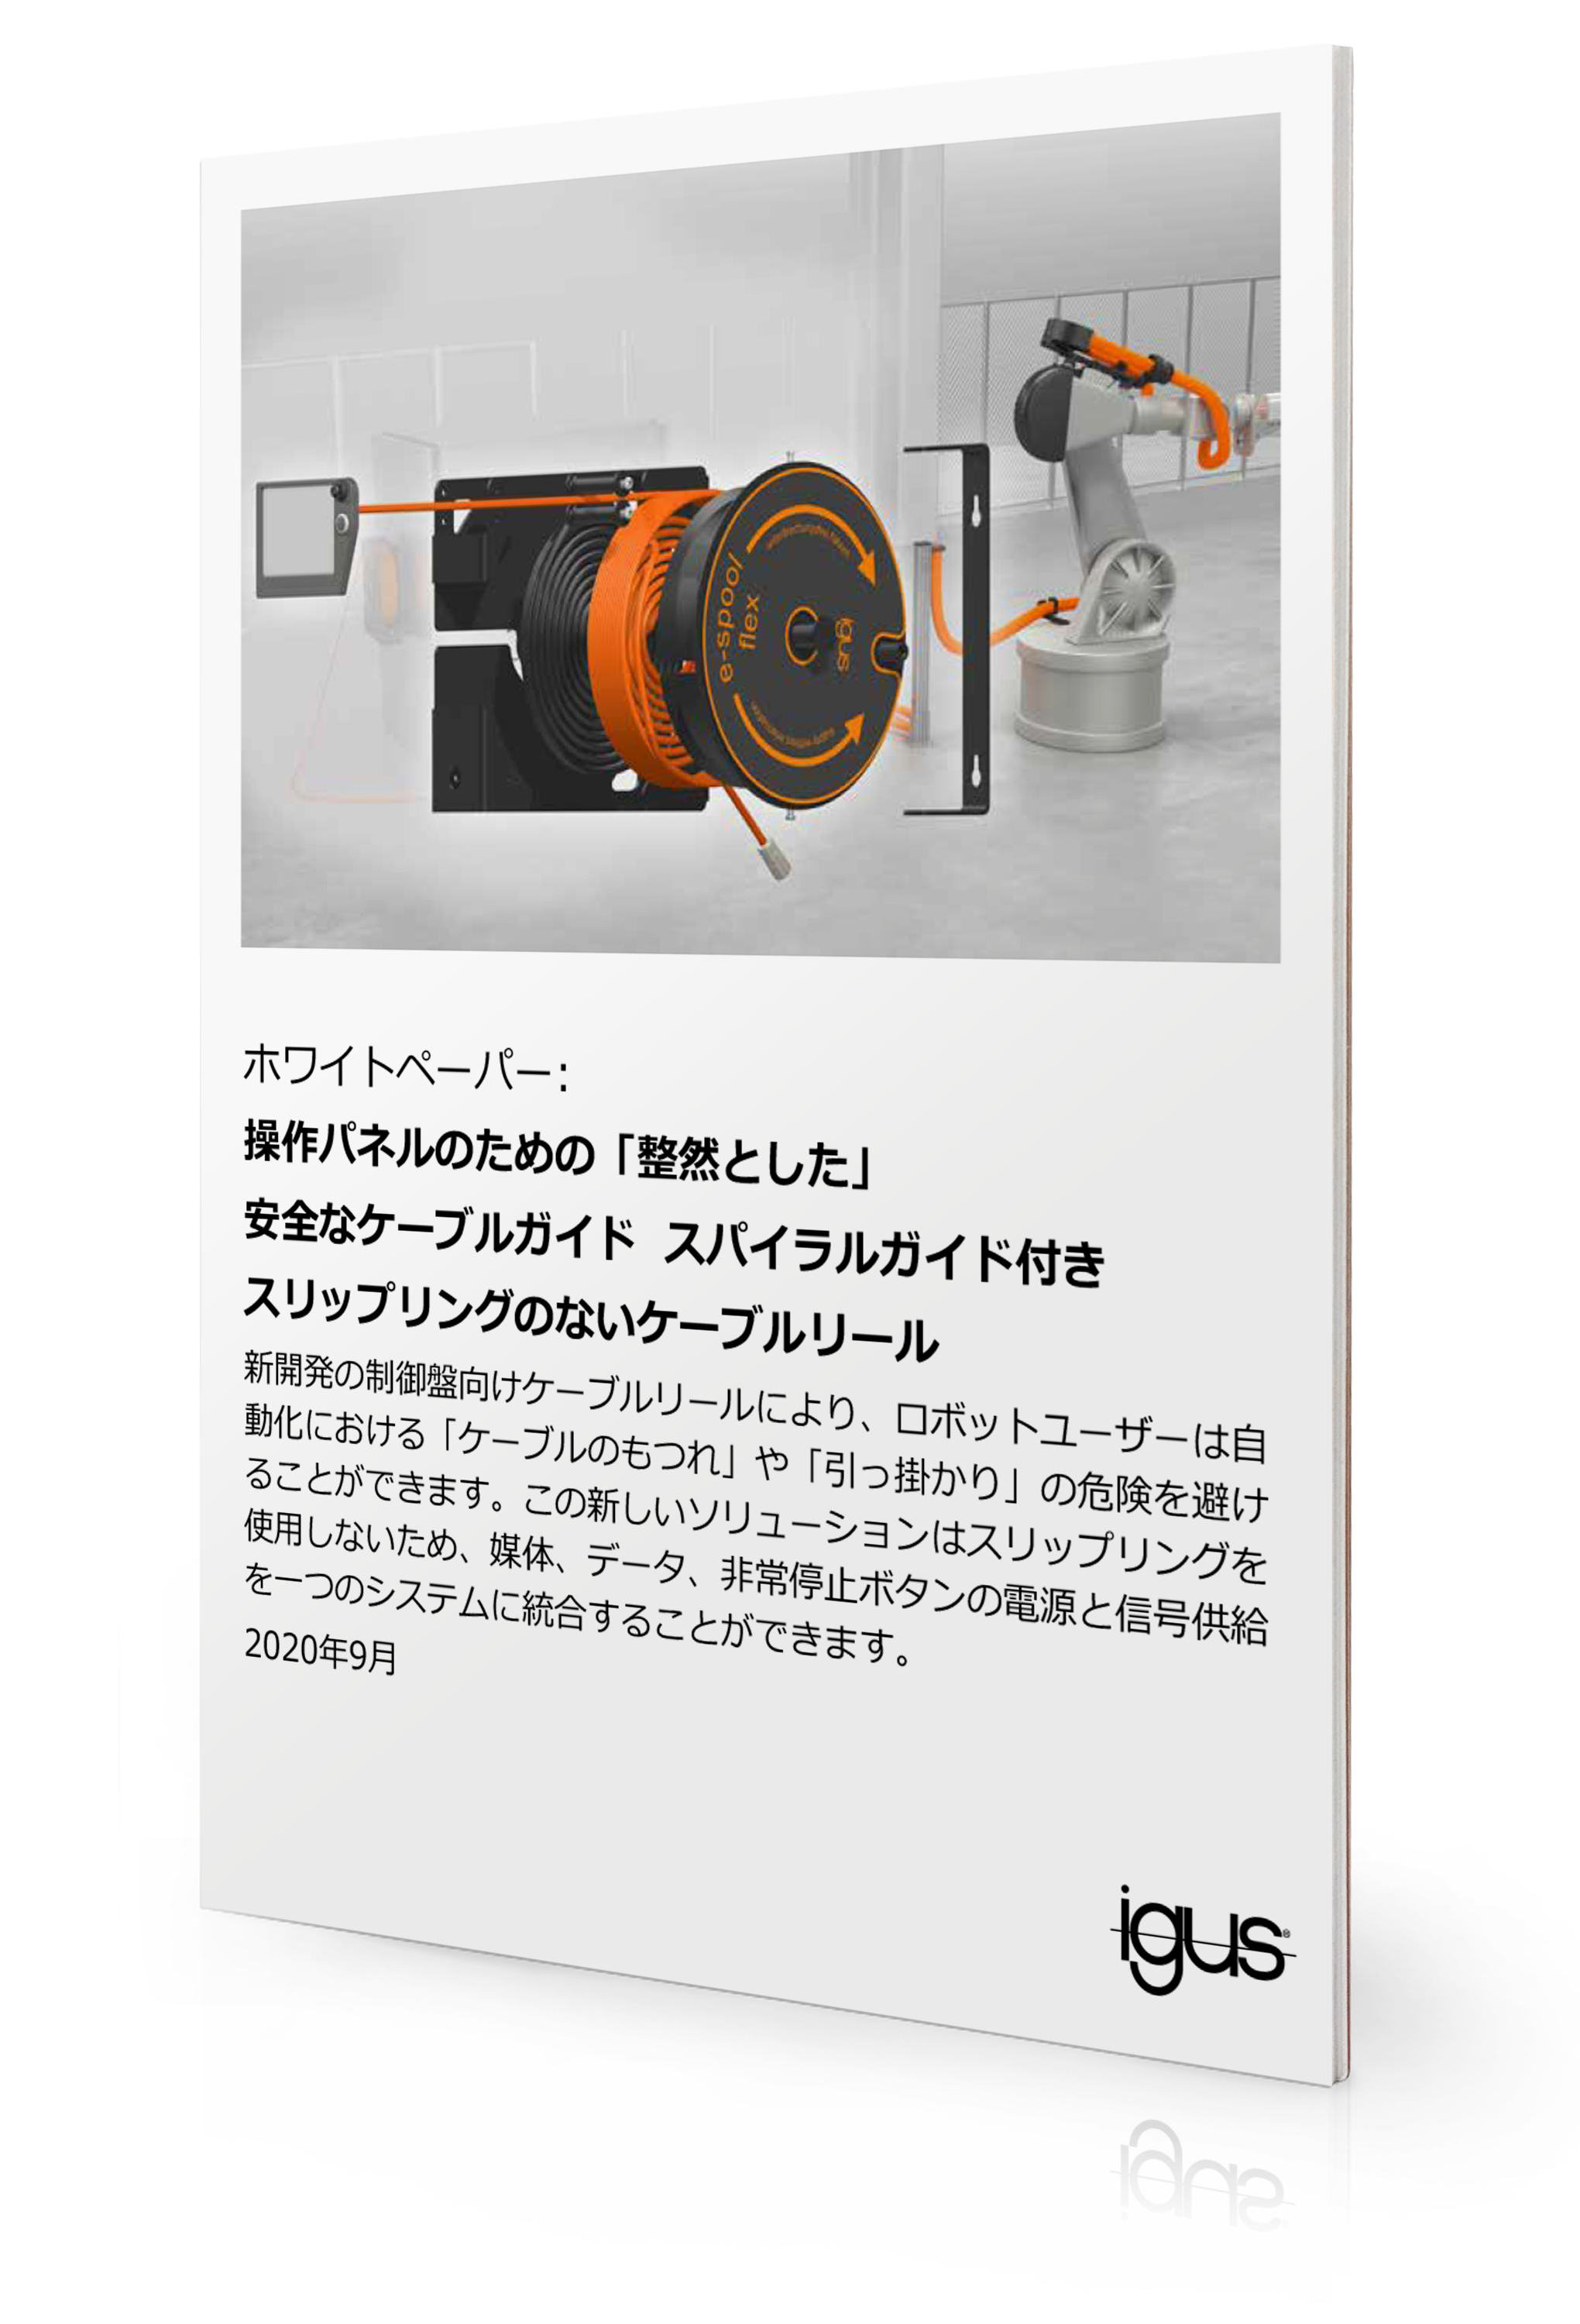 jp_e-spool-flex-Whitepaper-Mockup